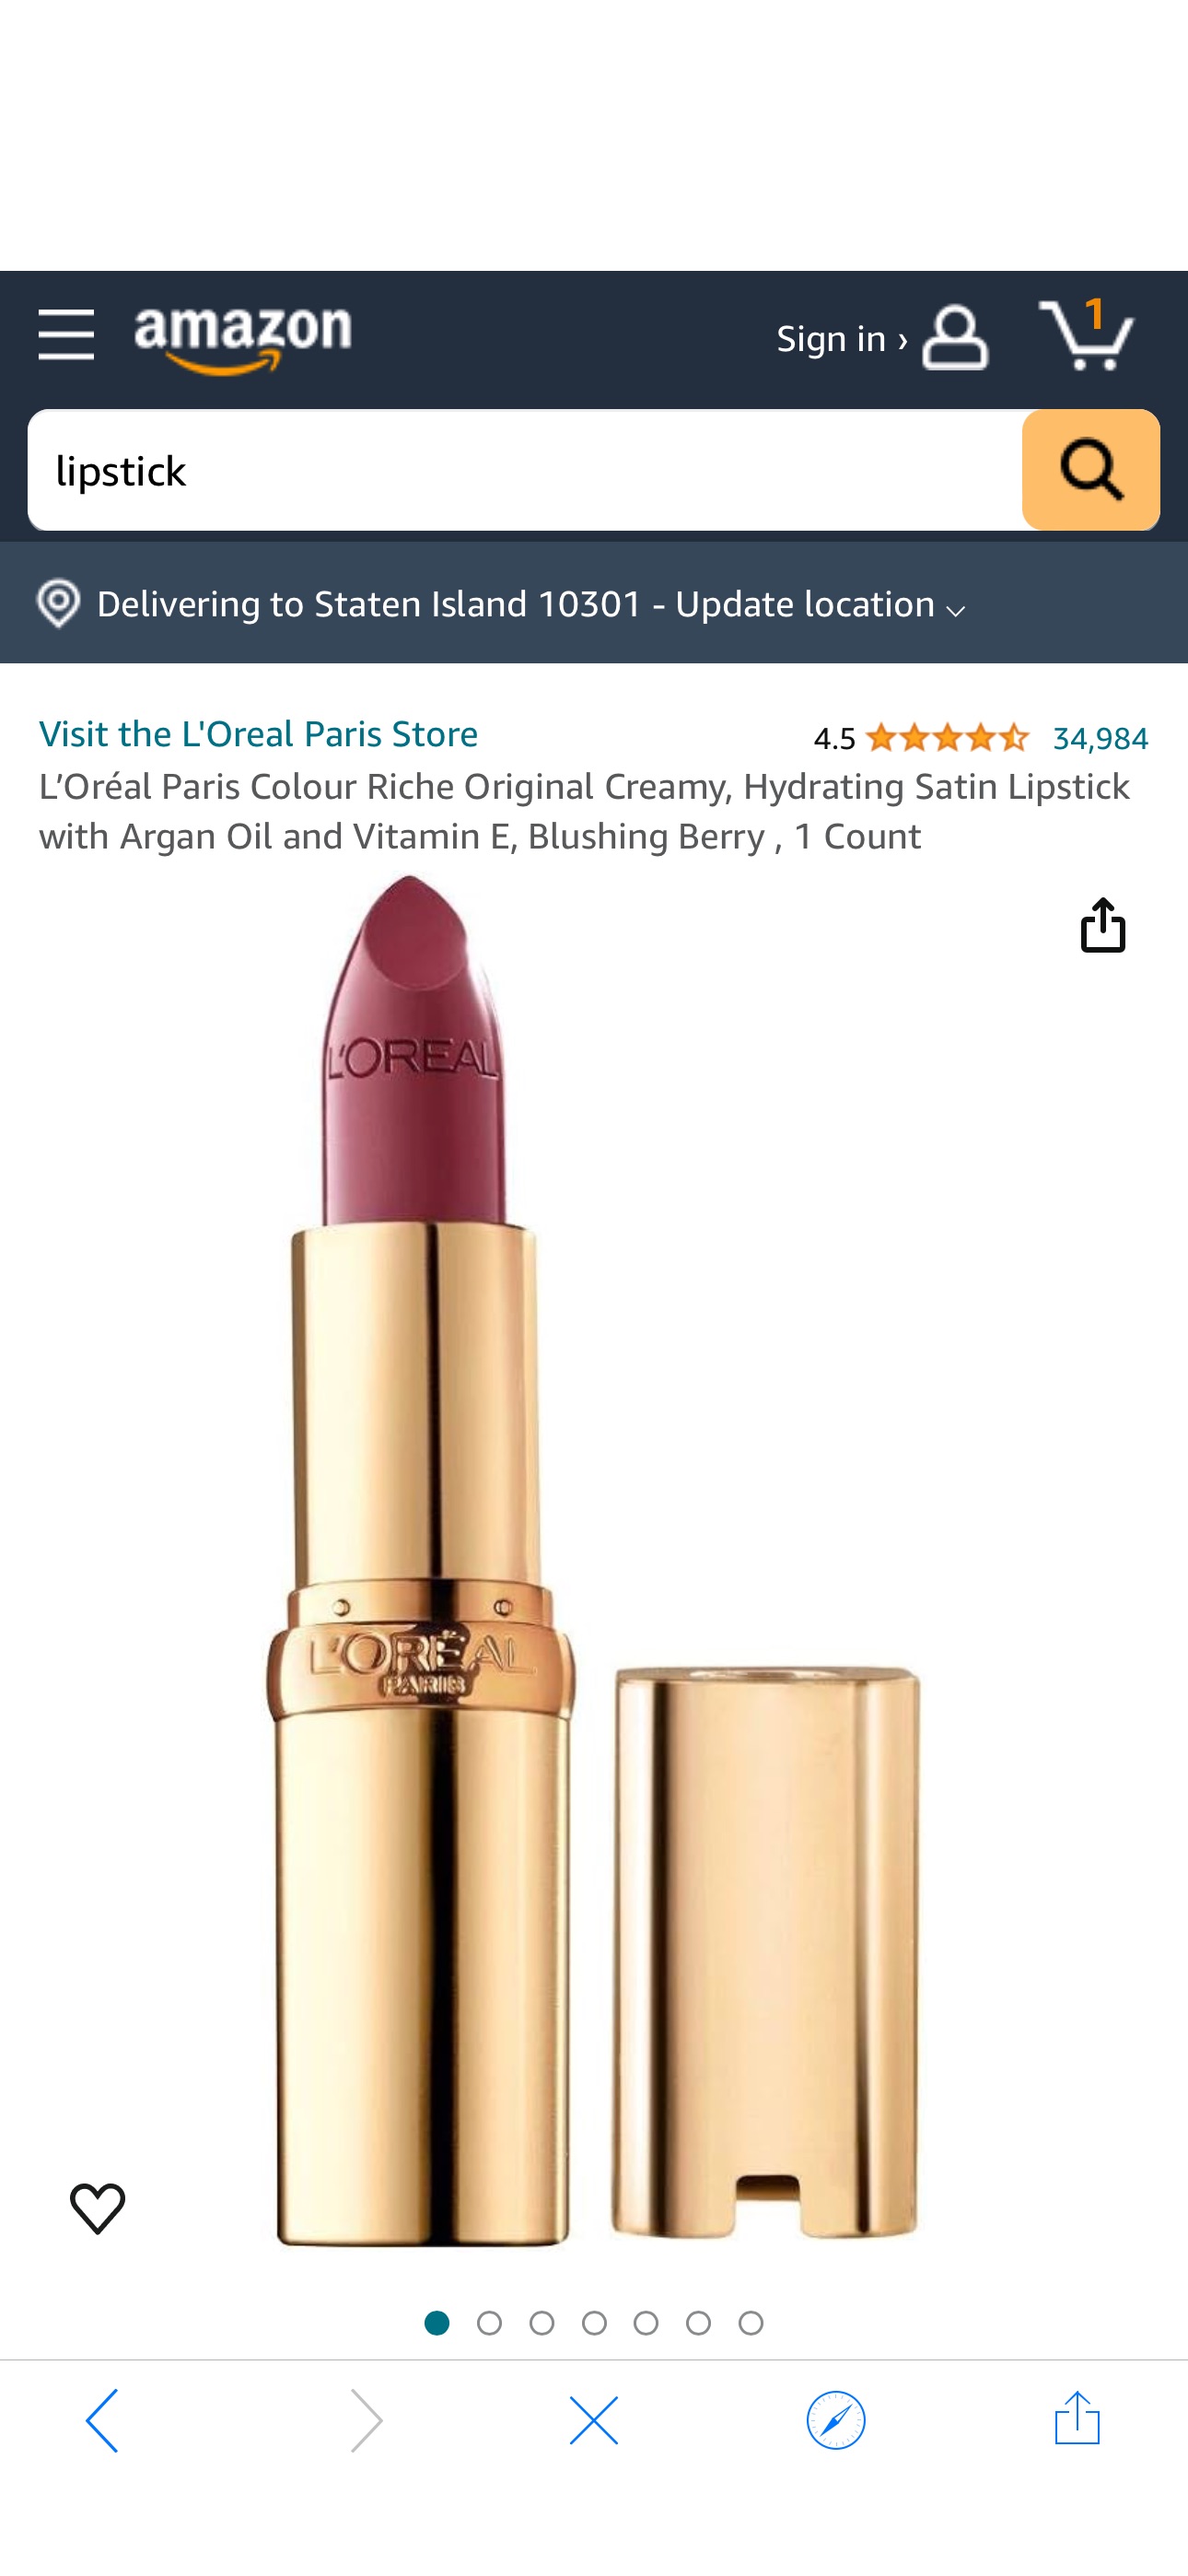 Amazon.com : L’Oréal Paris Colour Riche Original Creamy, Hydrating Satin Lipstick with Argan Oil and Vitamin E, Blushing Berry , 1 Count : Lipstick : Beauty & Personal Care